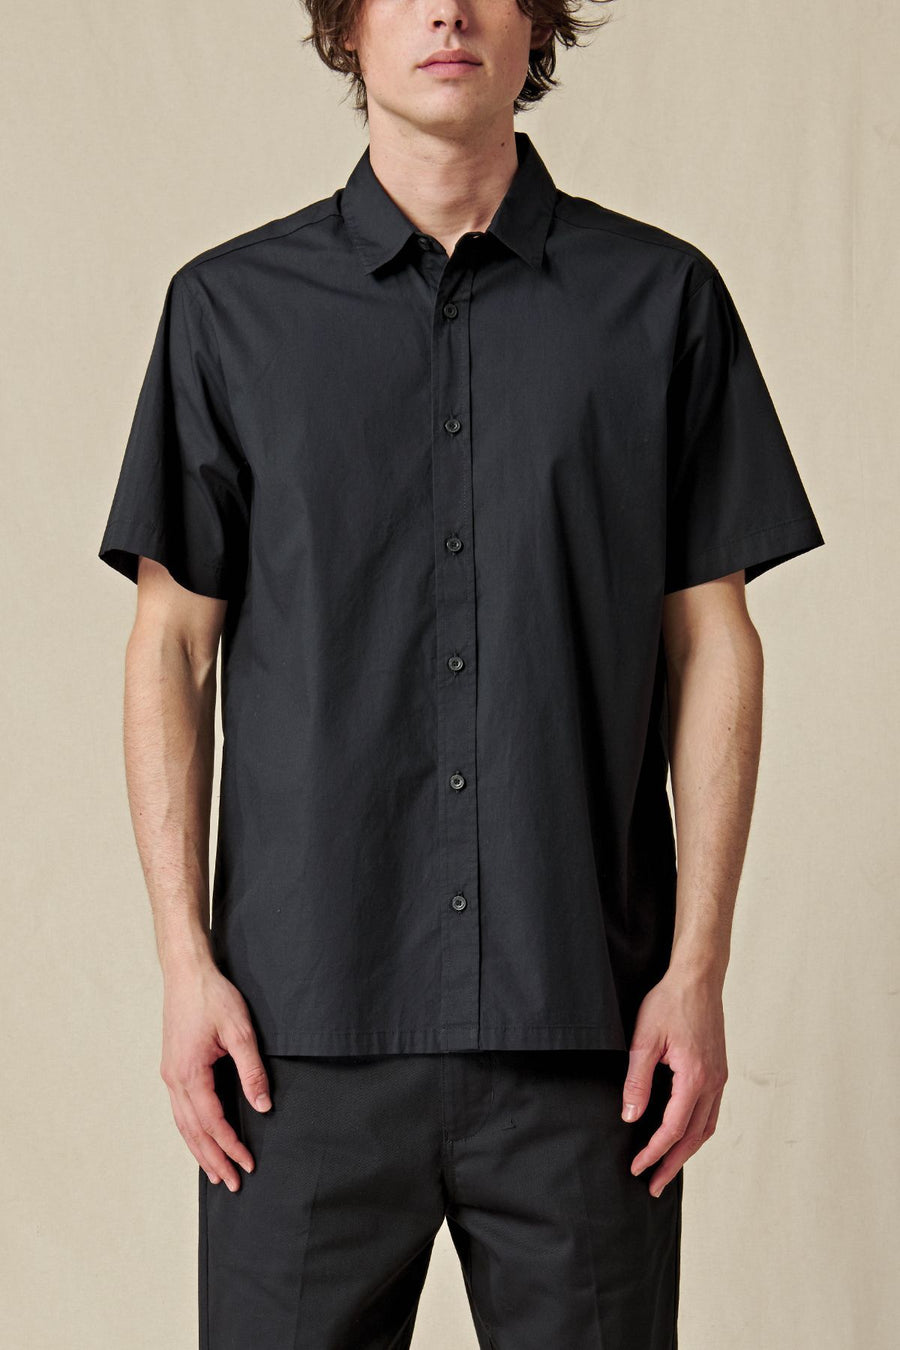 Globe Dion Agius SS Shirt - [ka(:)rısma] showroom & concept store